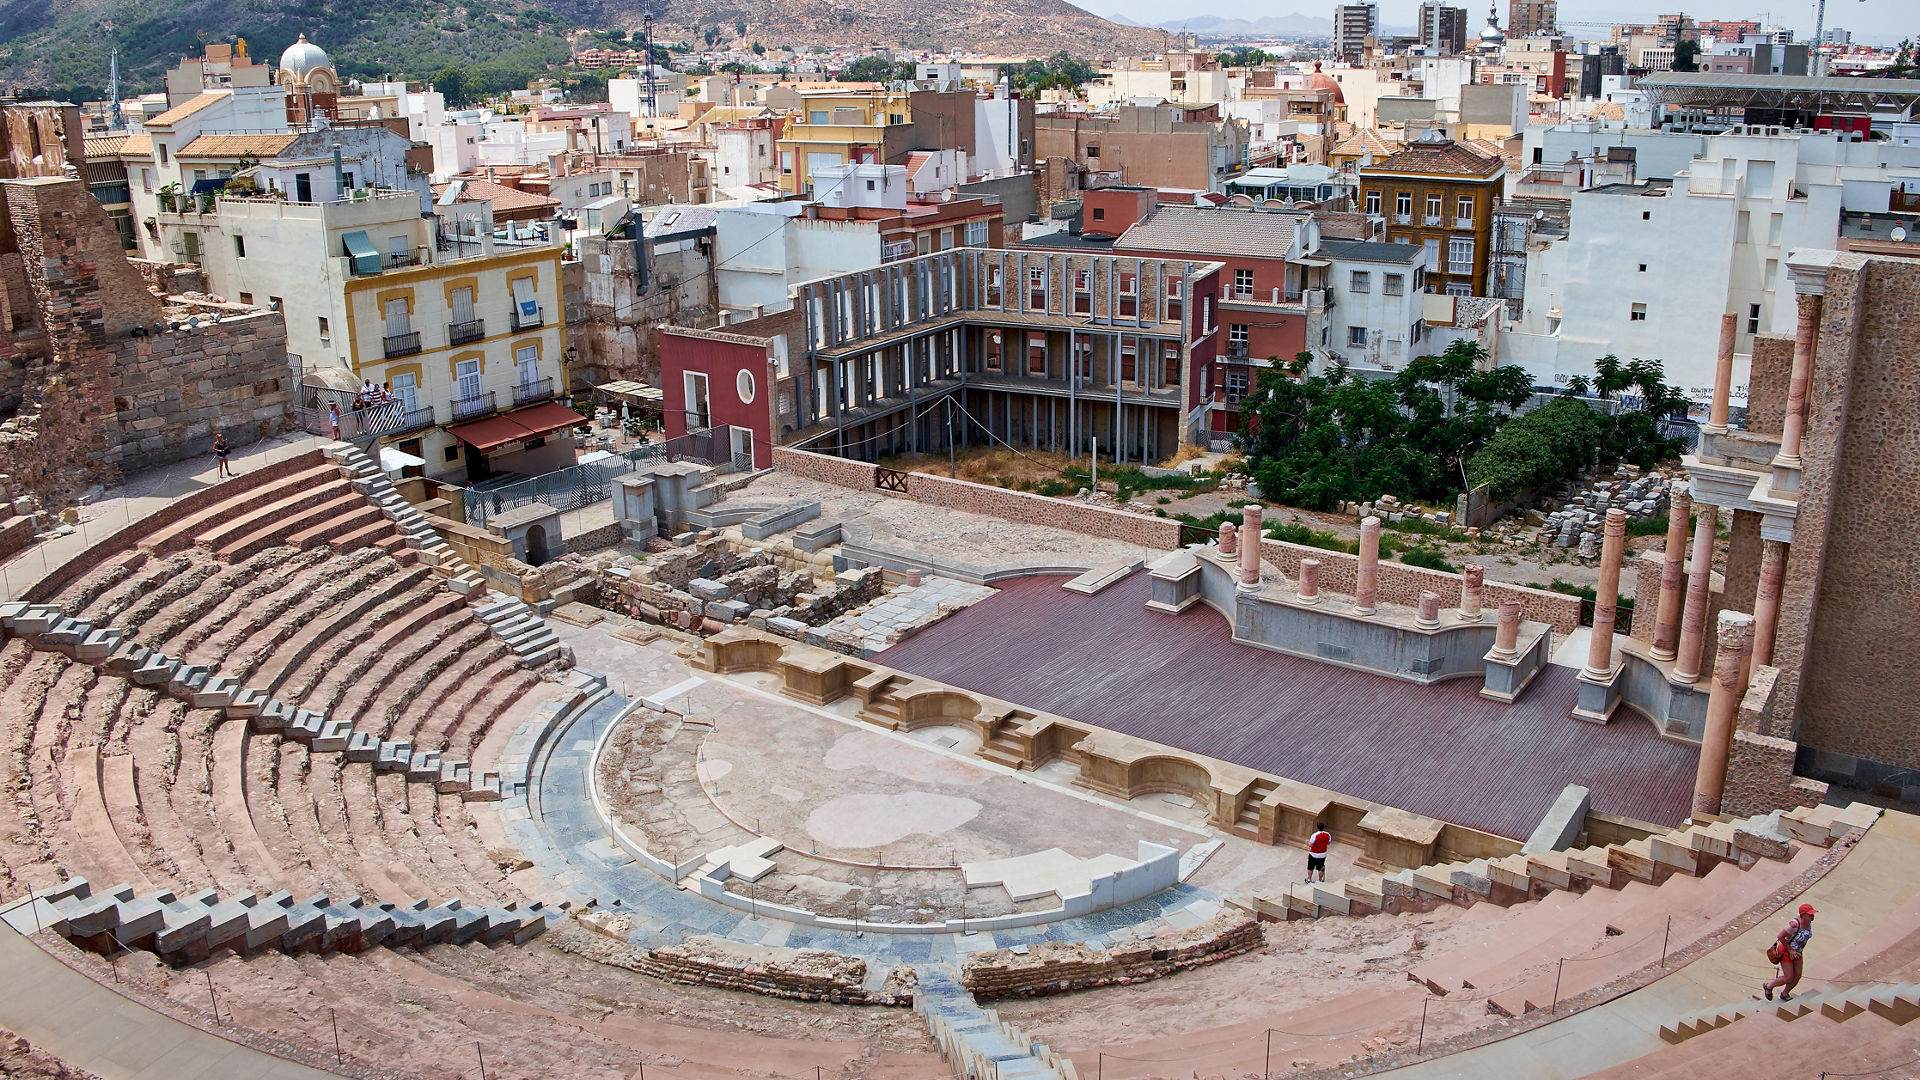 Roman amphitheater and ruins in Cartagena city, region of Murcia, Spain